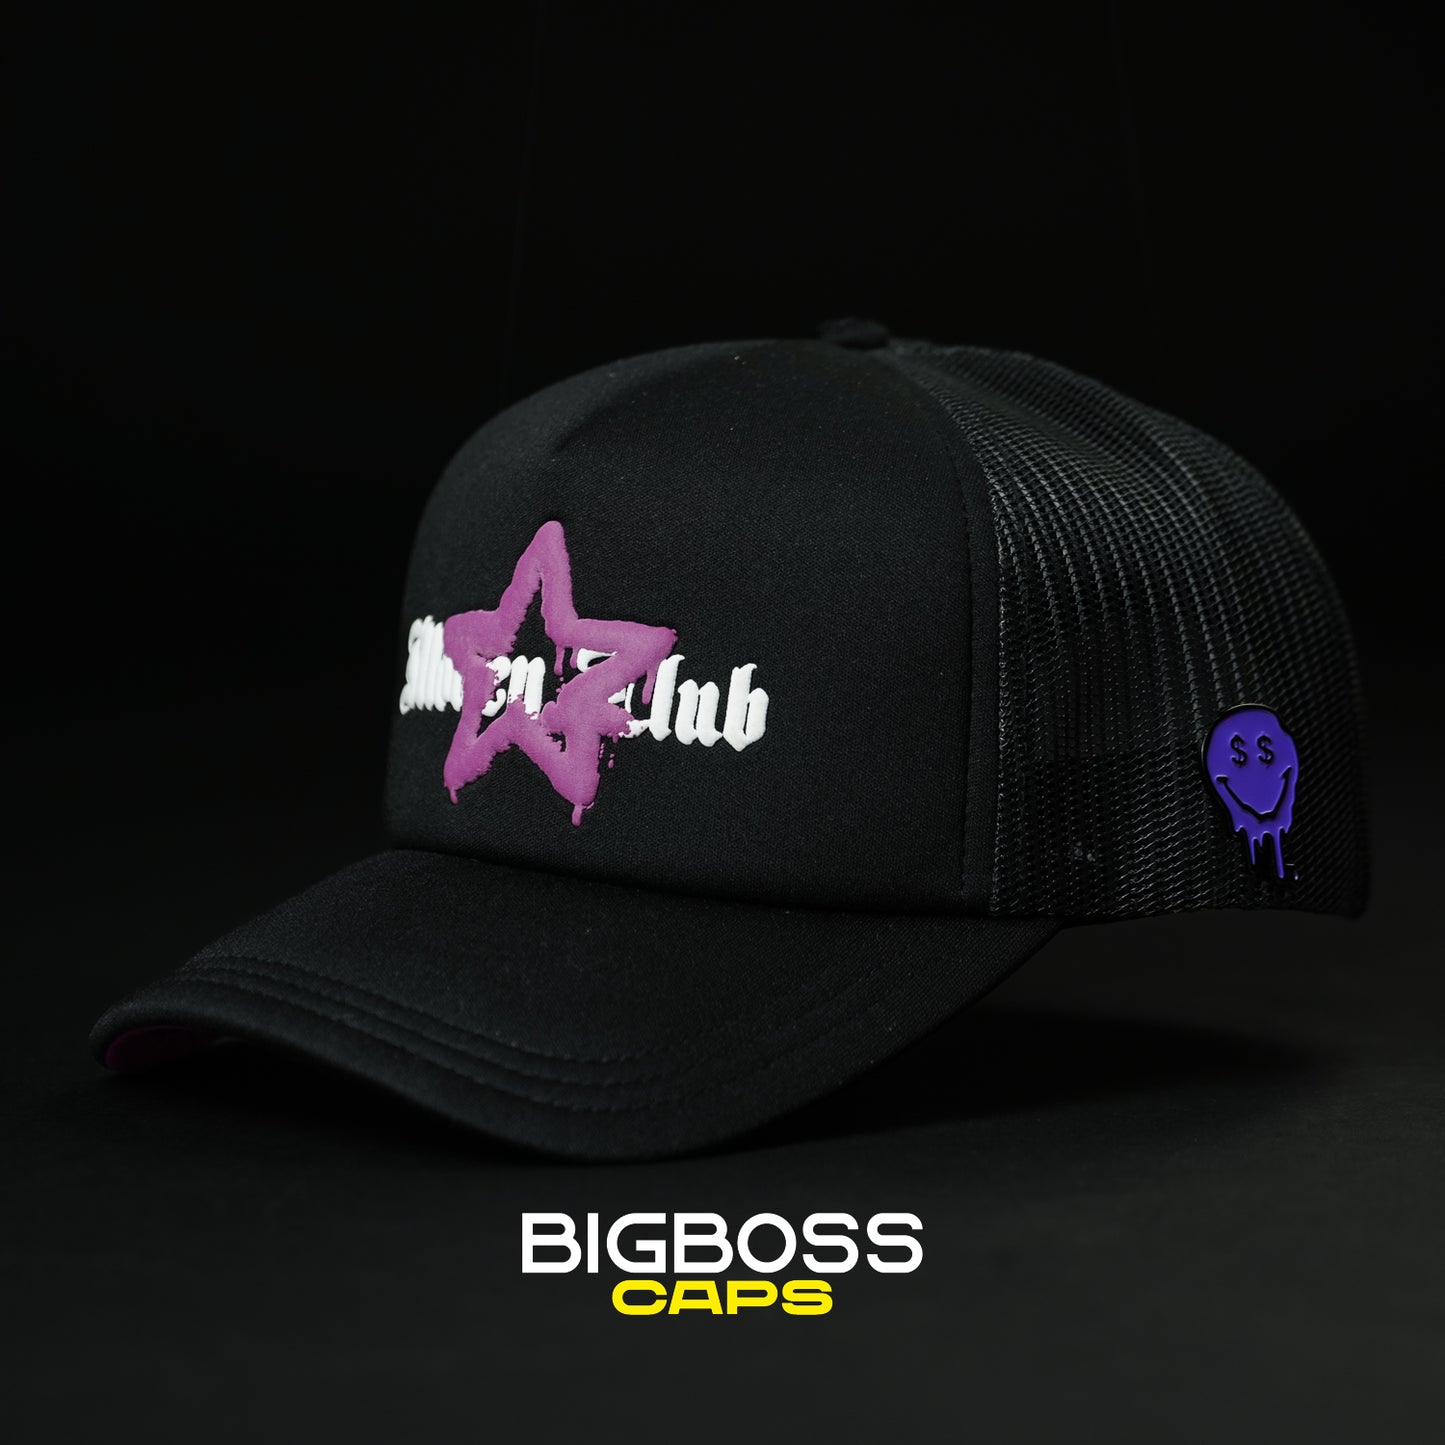 MONEY CLUB - Purple Star